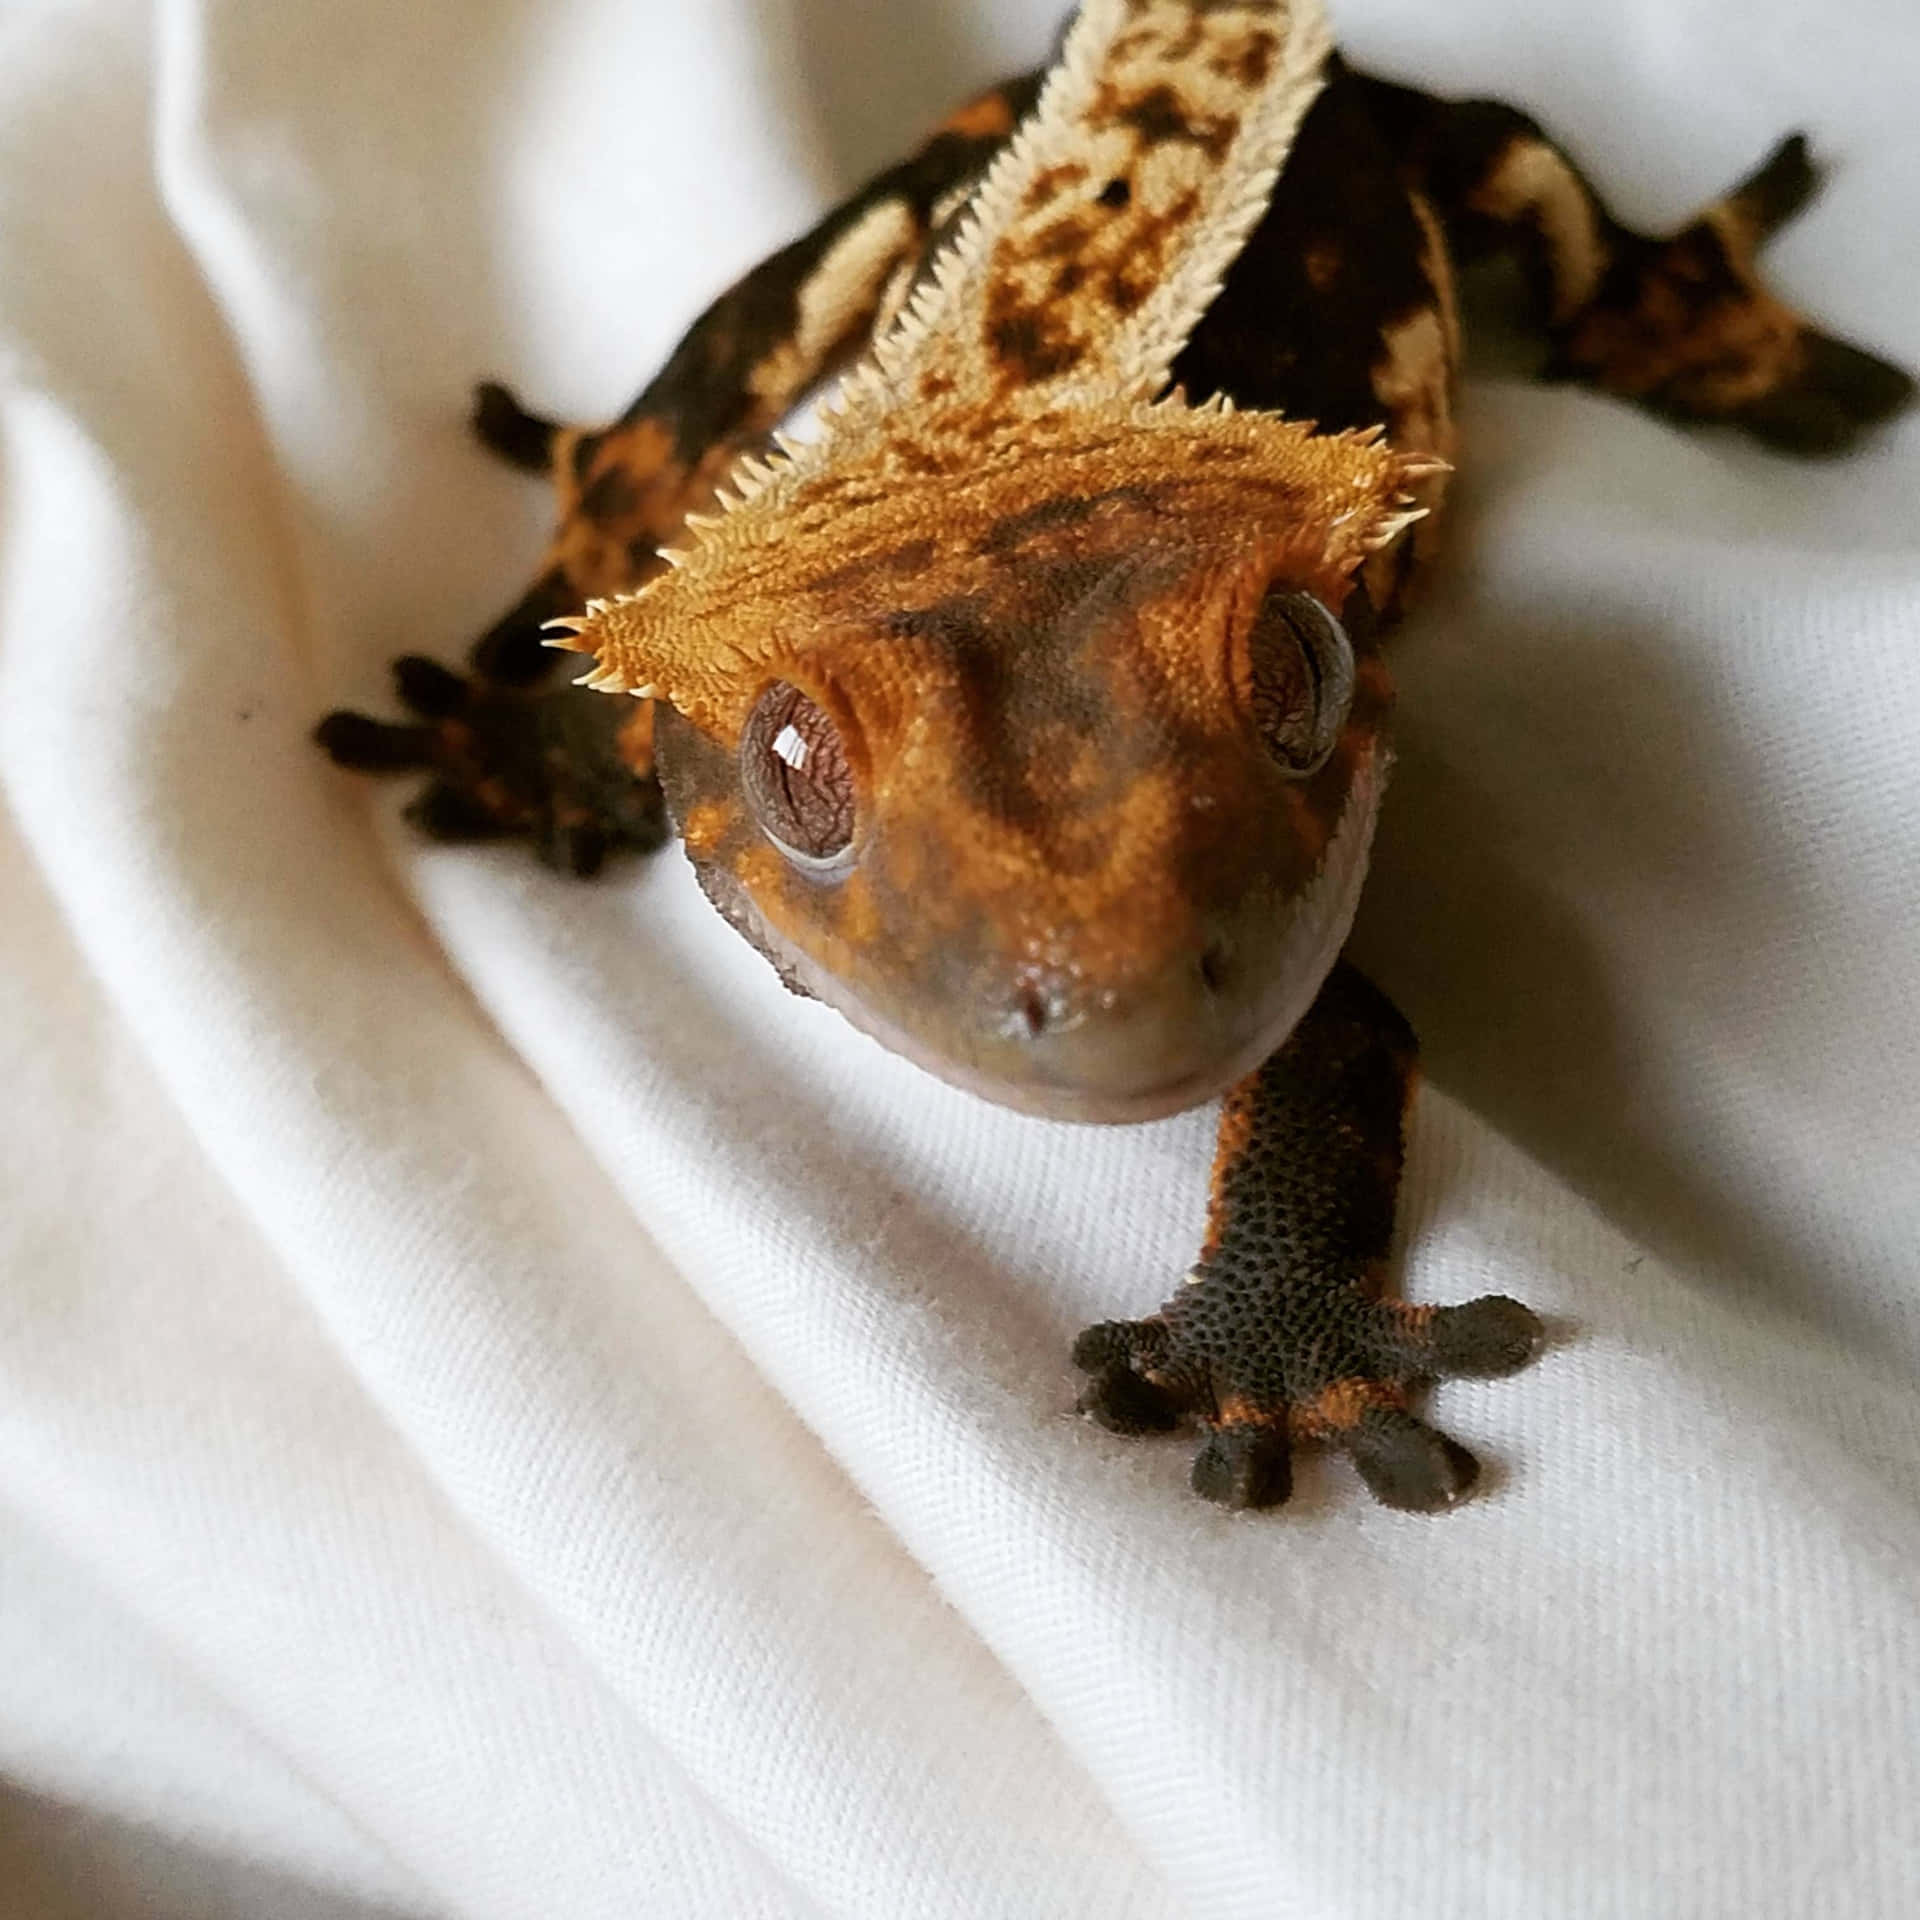 A Close-up of a Gecko